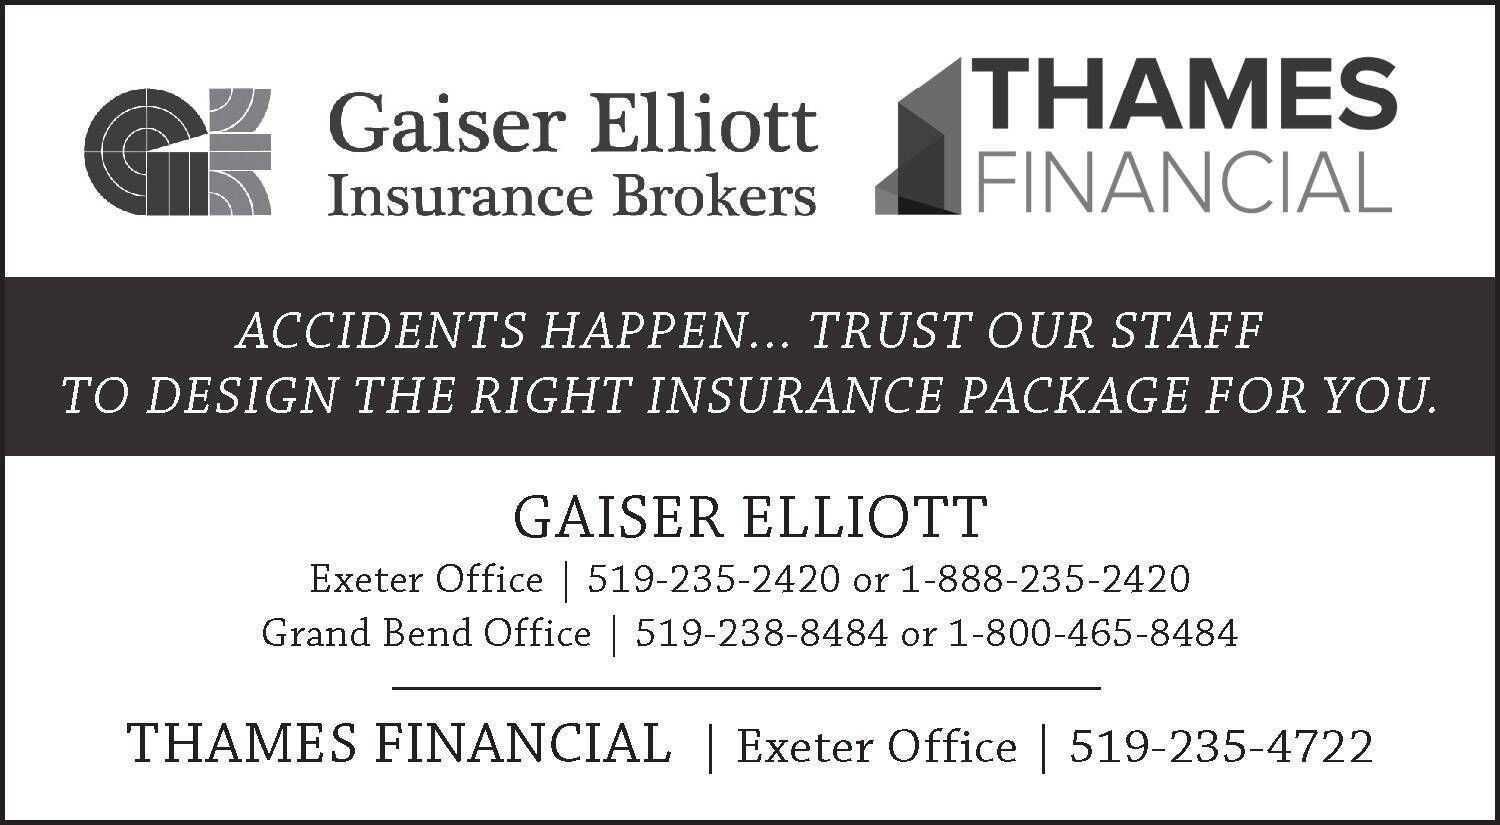 Gaiser Elliott Insurance & Thames Financial 